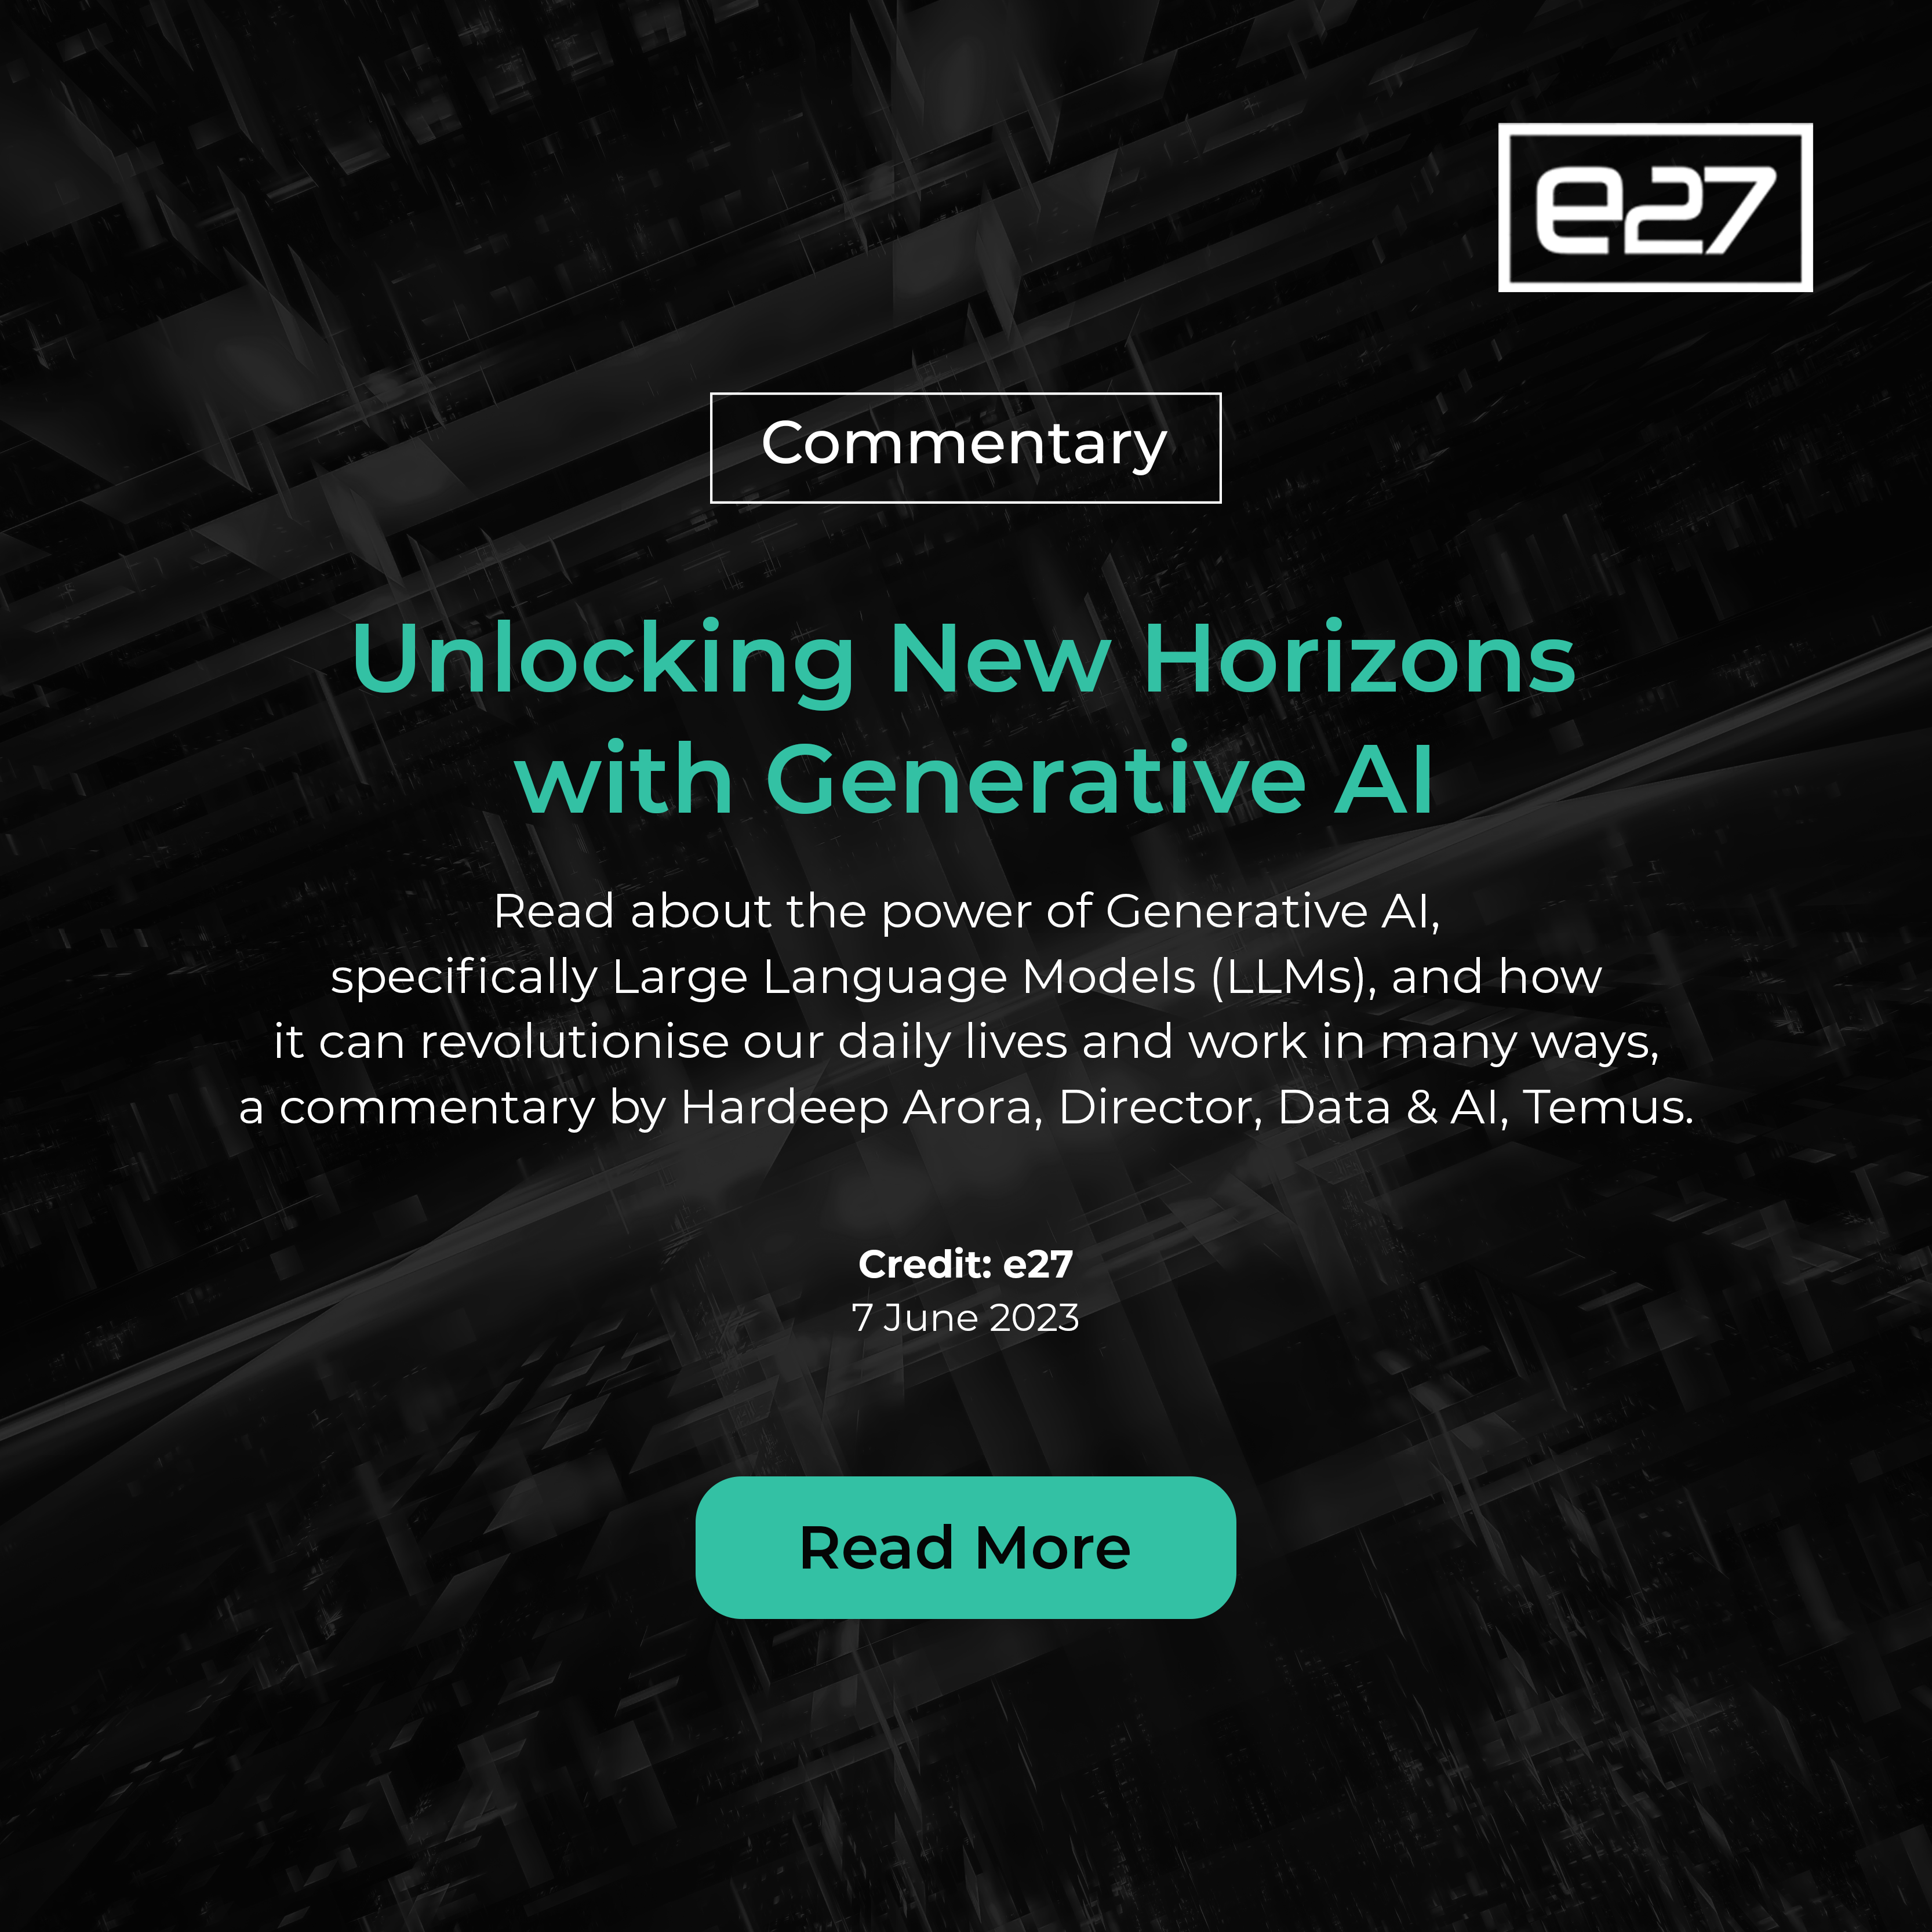 e27 Commentary: Unlocking New Horizons with Generative AI (Hardeep)